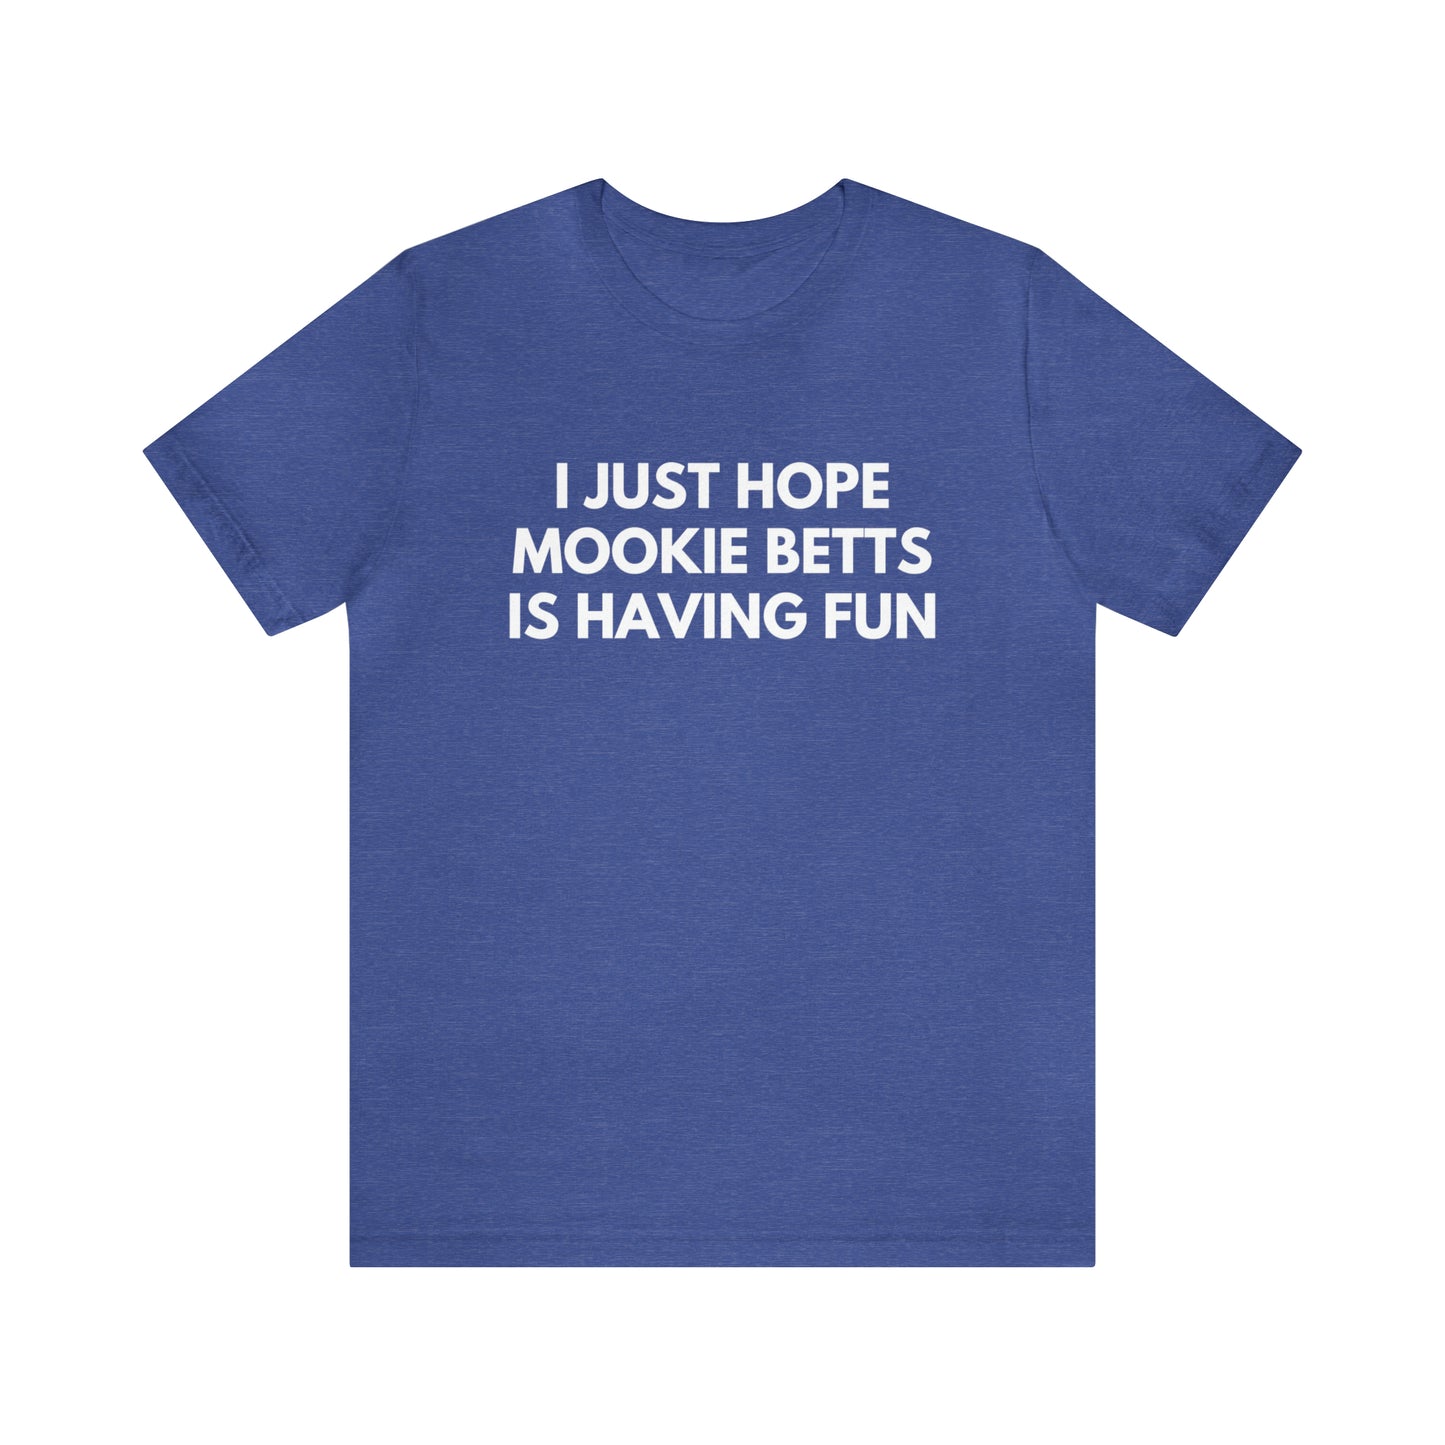 Mookie Betts Having Fun - Unisex T-shirt